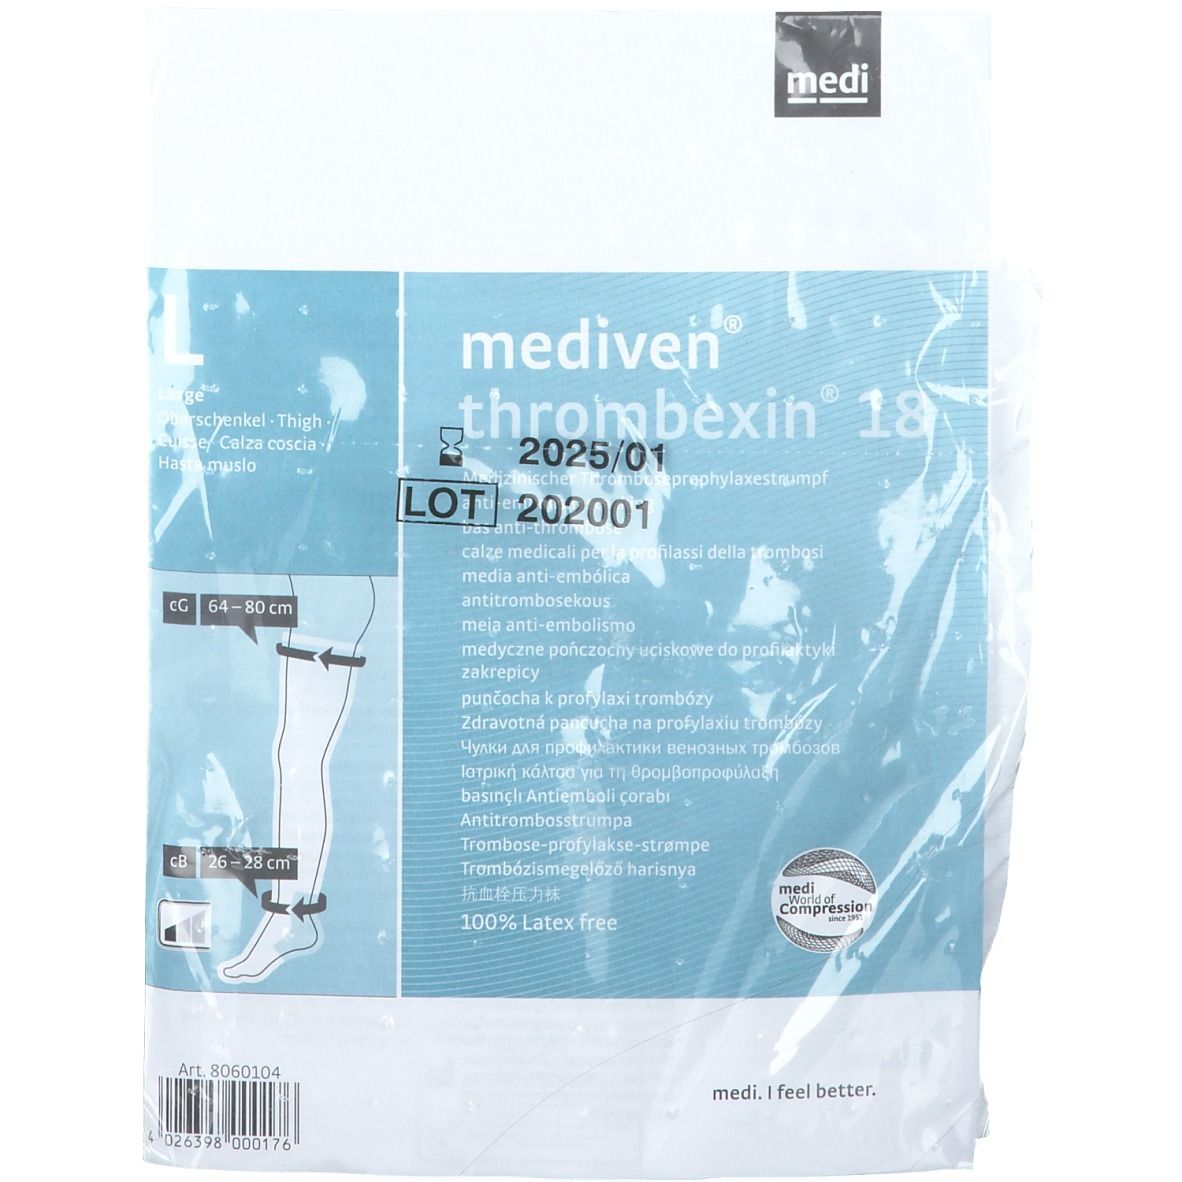 mediven® thrombexin® 18